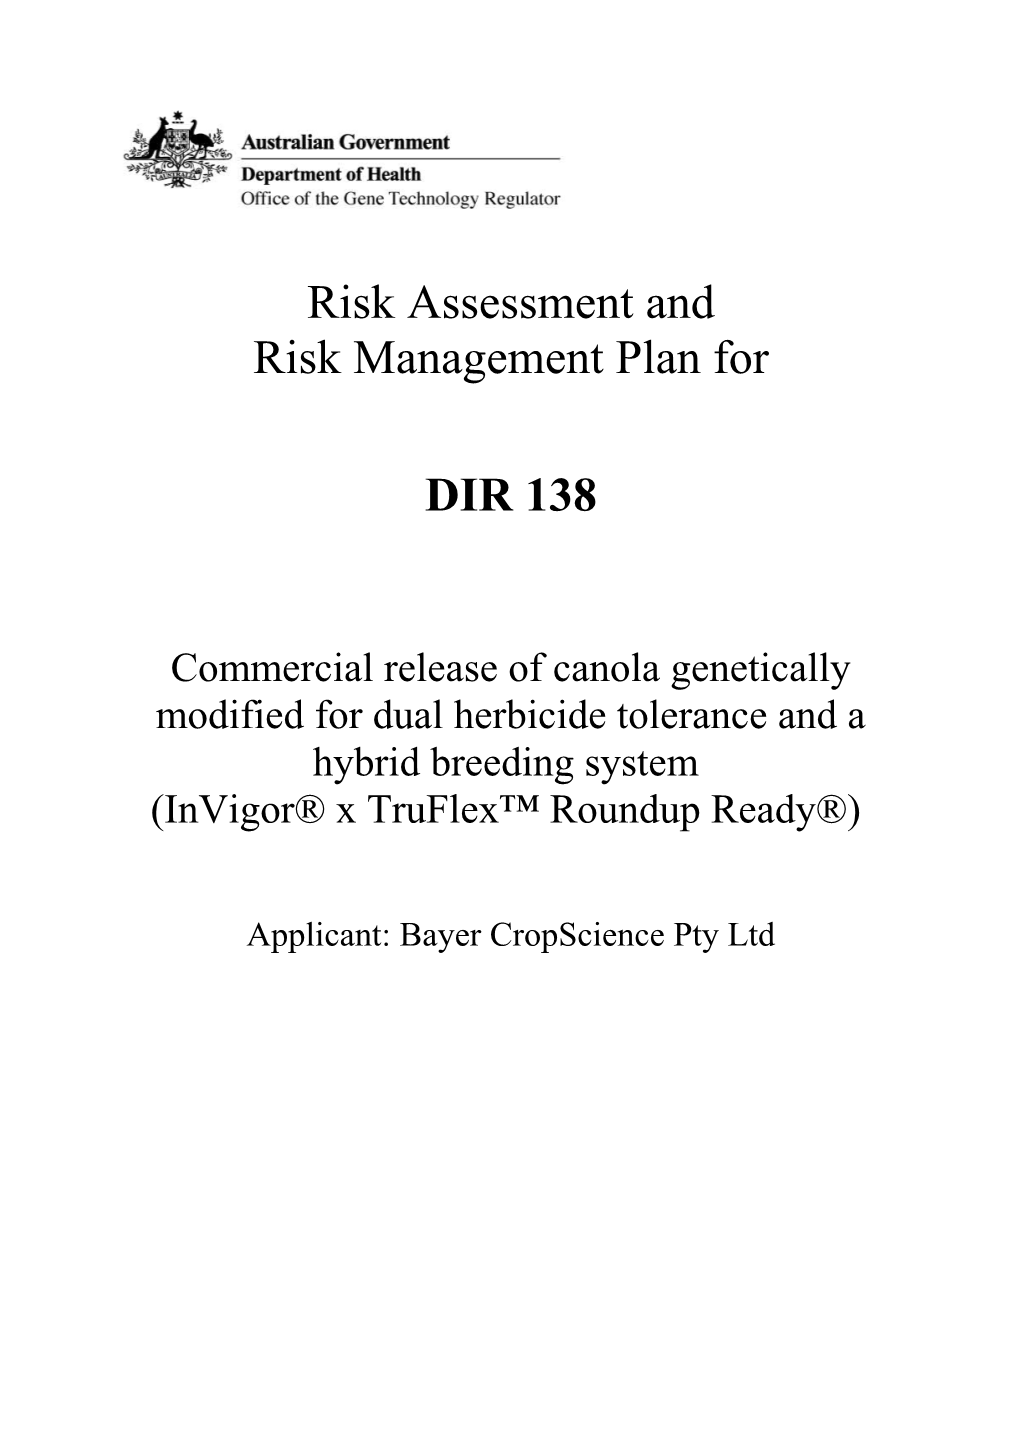 DIR 138 - Risk Assessment & Risk Management Plan